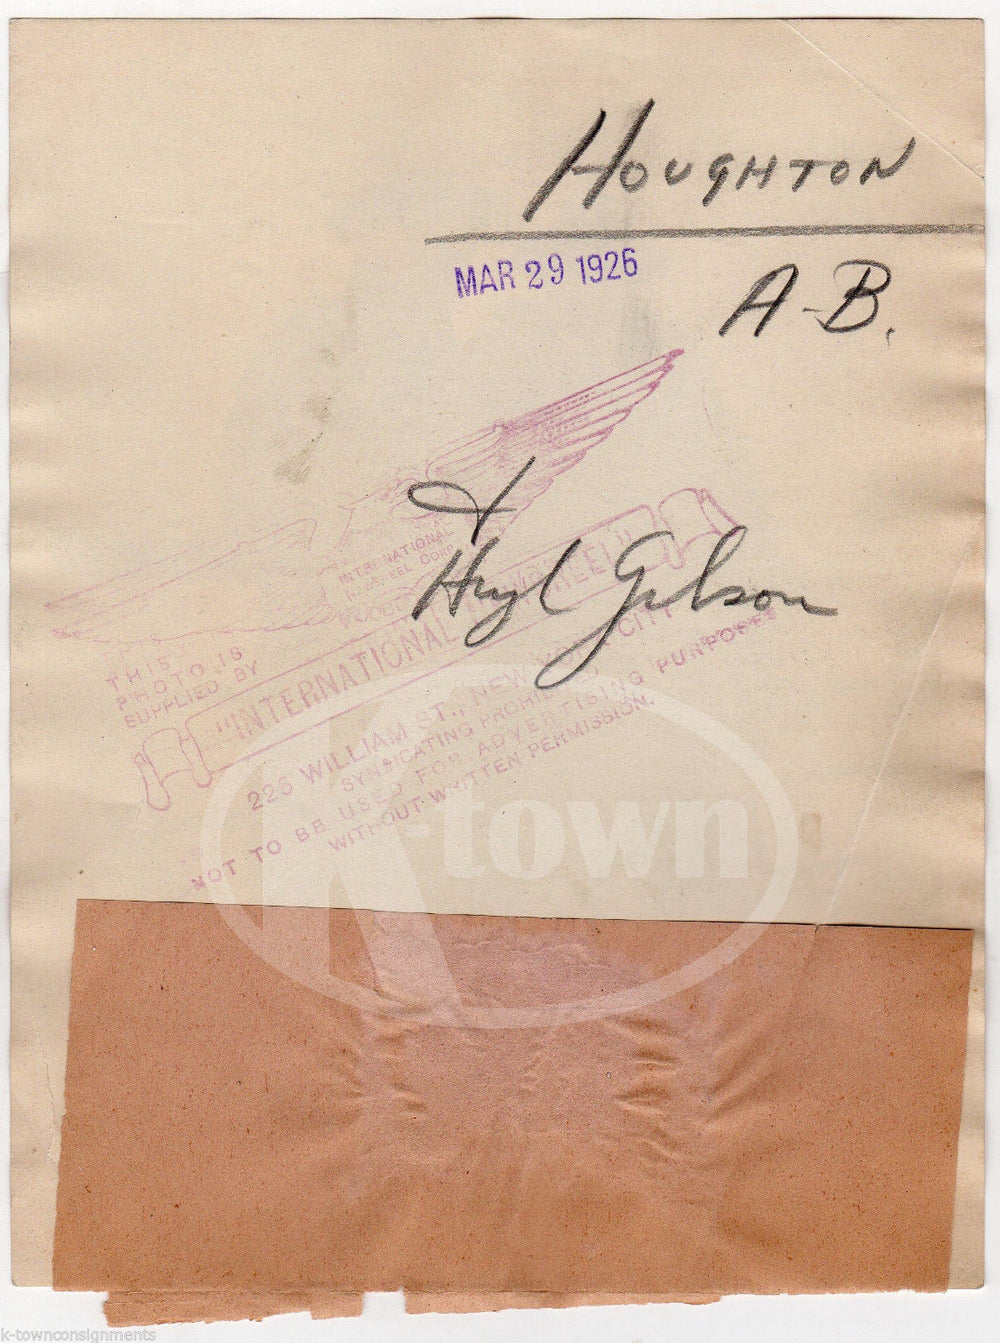 HUGH GIBSON FOREIGN SERVICE DISARMAMENT DIPLOMAT ANTIQUE NEWS PRESS PHOTO 1926 - K-townConsignments